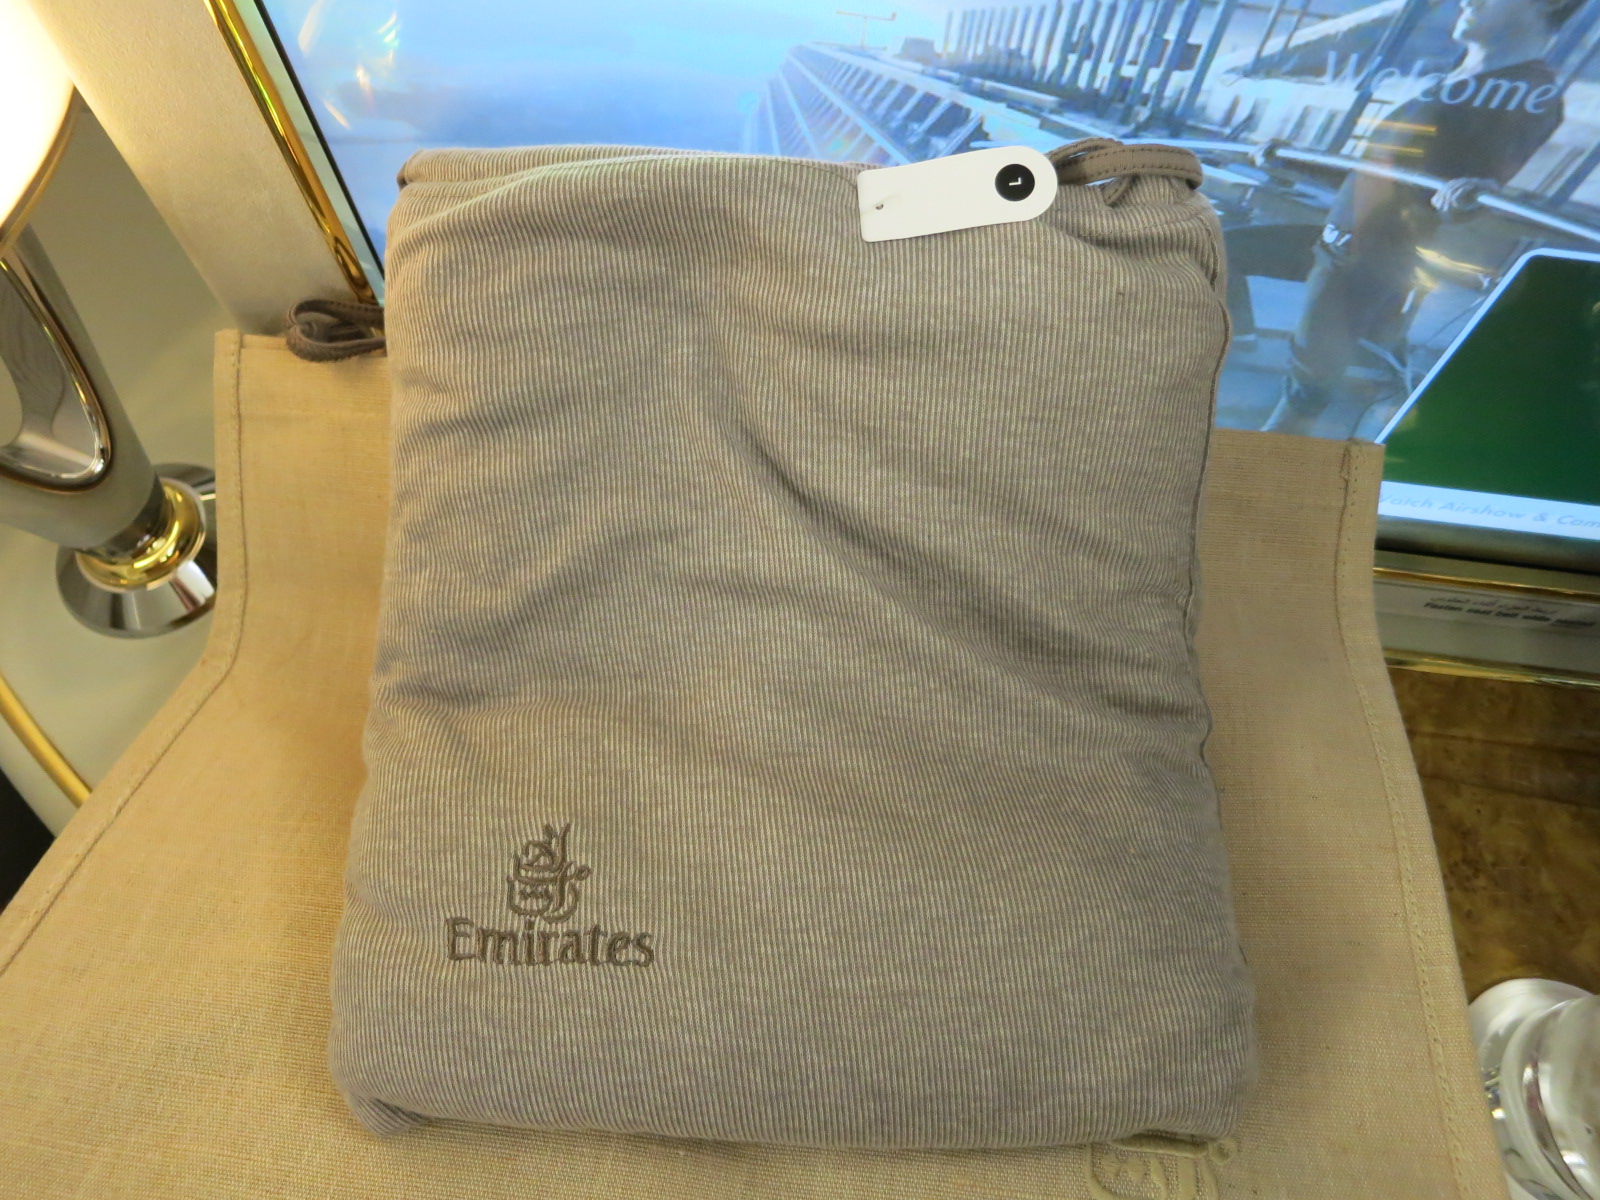 Emirates First Class suites A380 Houston - Dubai pajamas